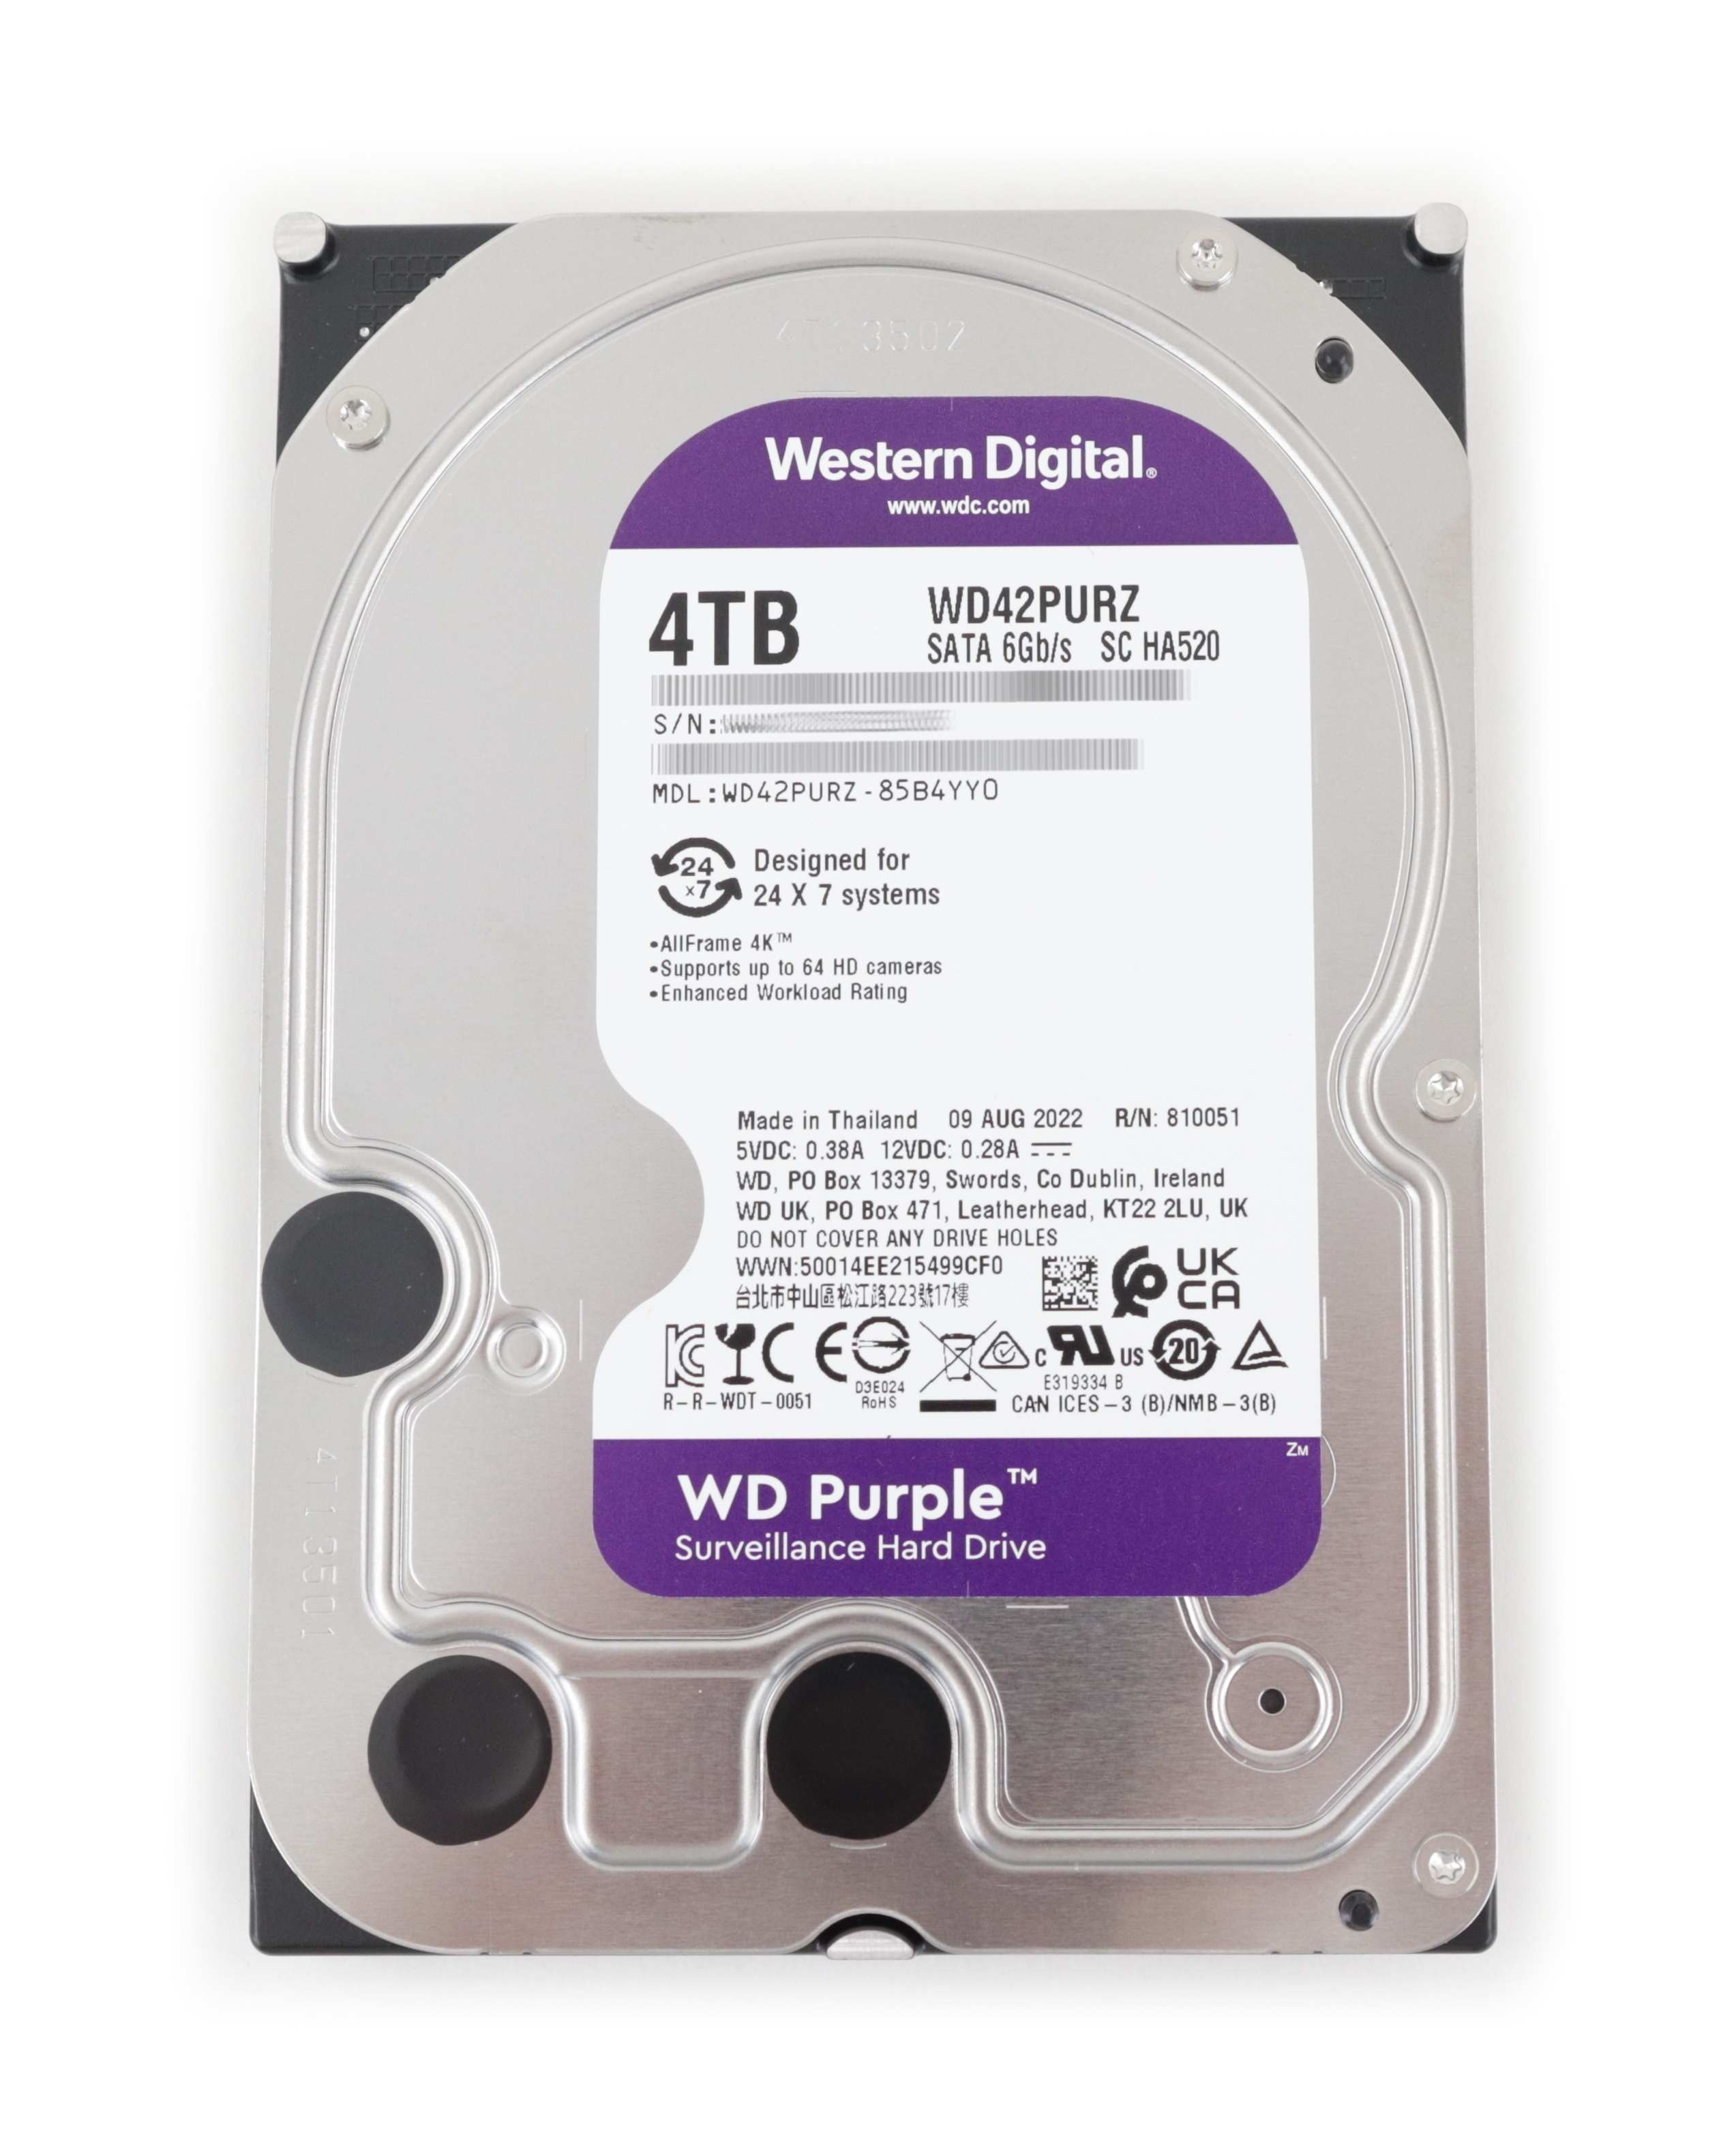 WD Purple Surveillance 4TB WD42PURZ-85B4YY0 SC HA520 SATA 6GB/s Cache 256MB 3.5 - Click Image to Close